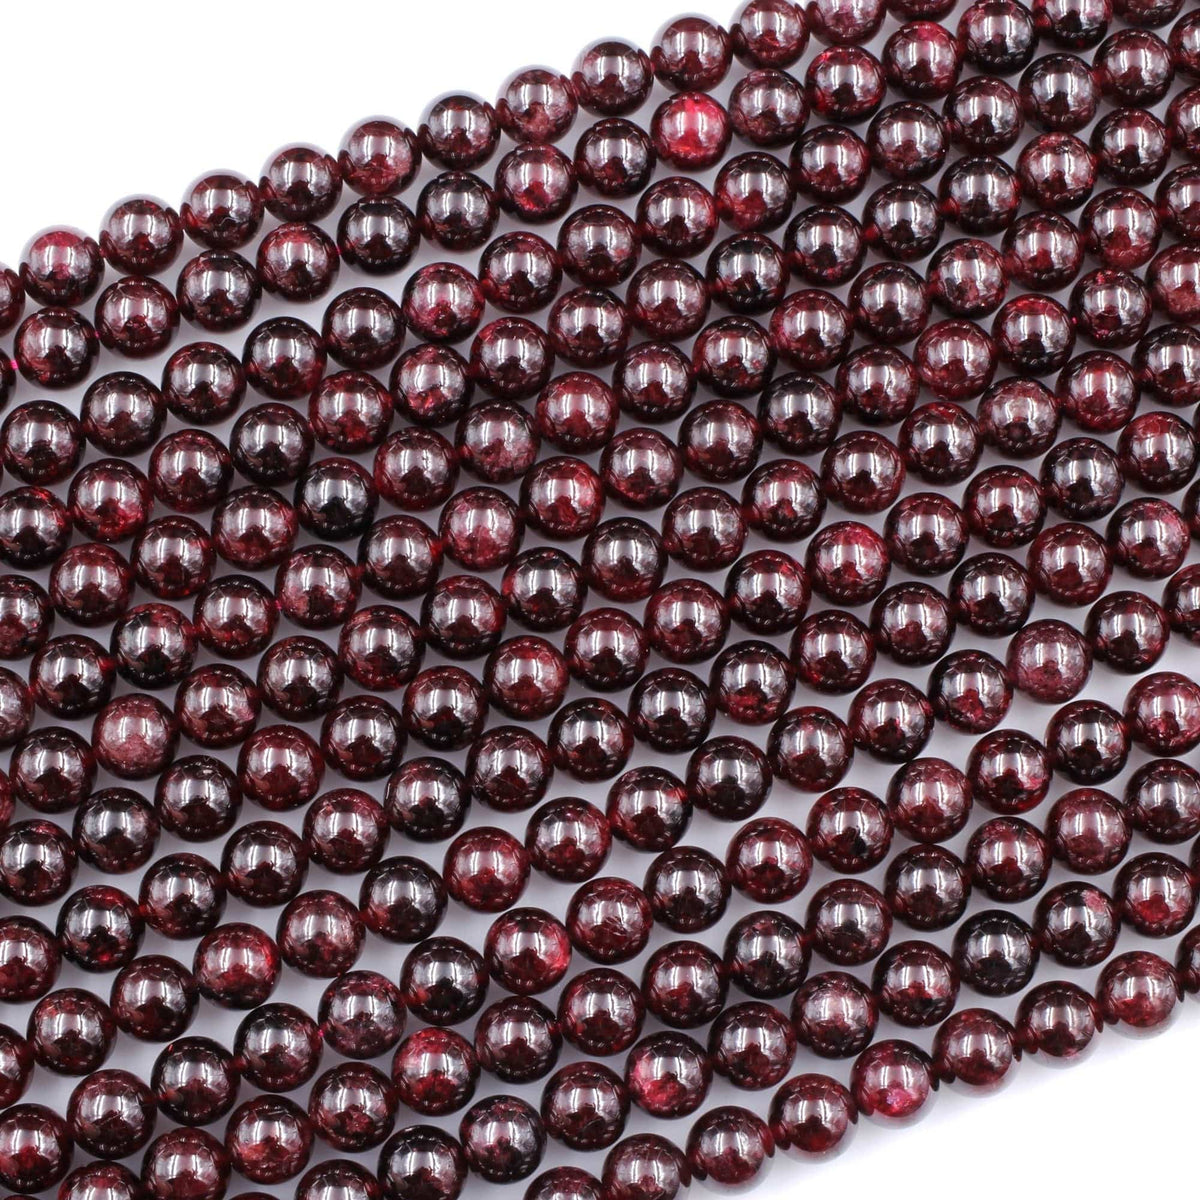 4mm Smooth Round, Red Garnet Beads (16 Strand)